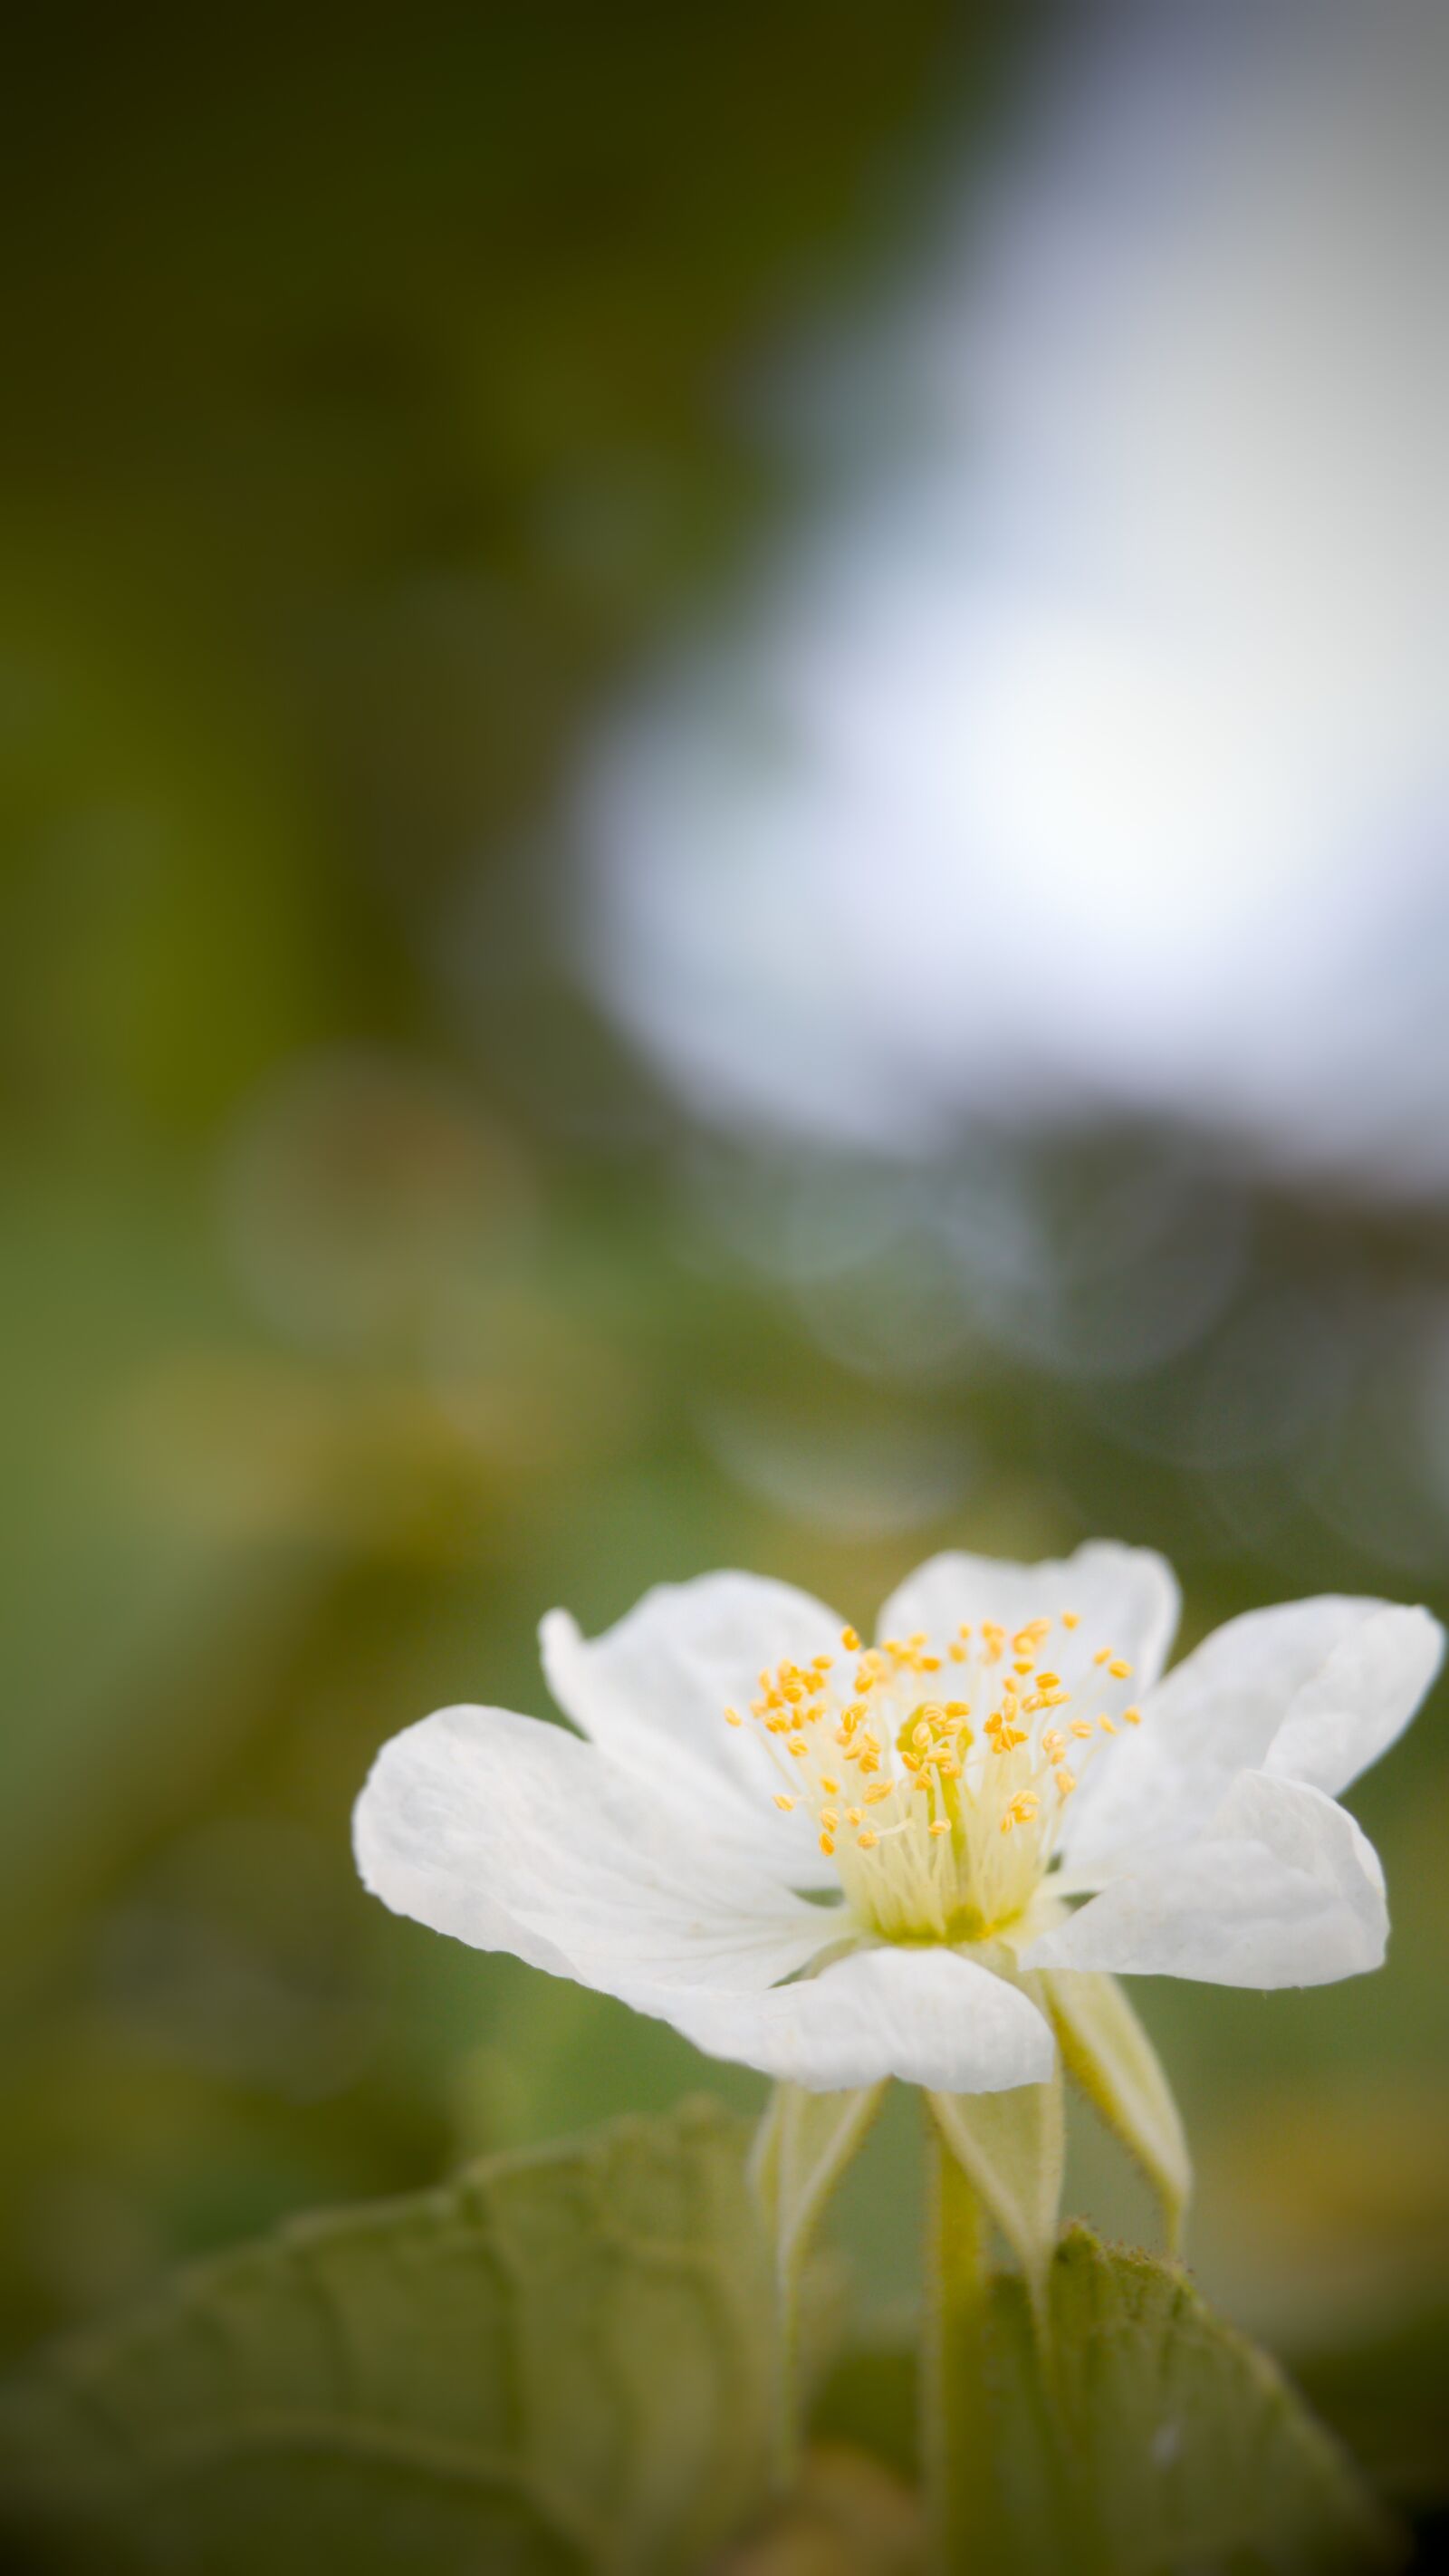 LG G5 sample photo. Flower, macro, blur photography